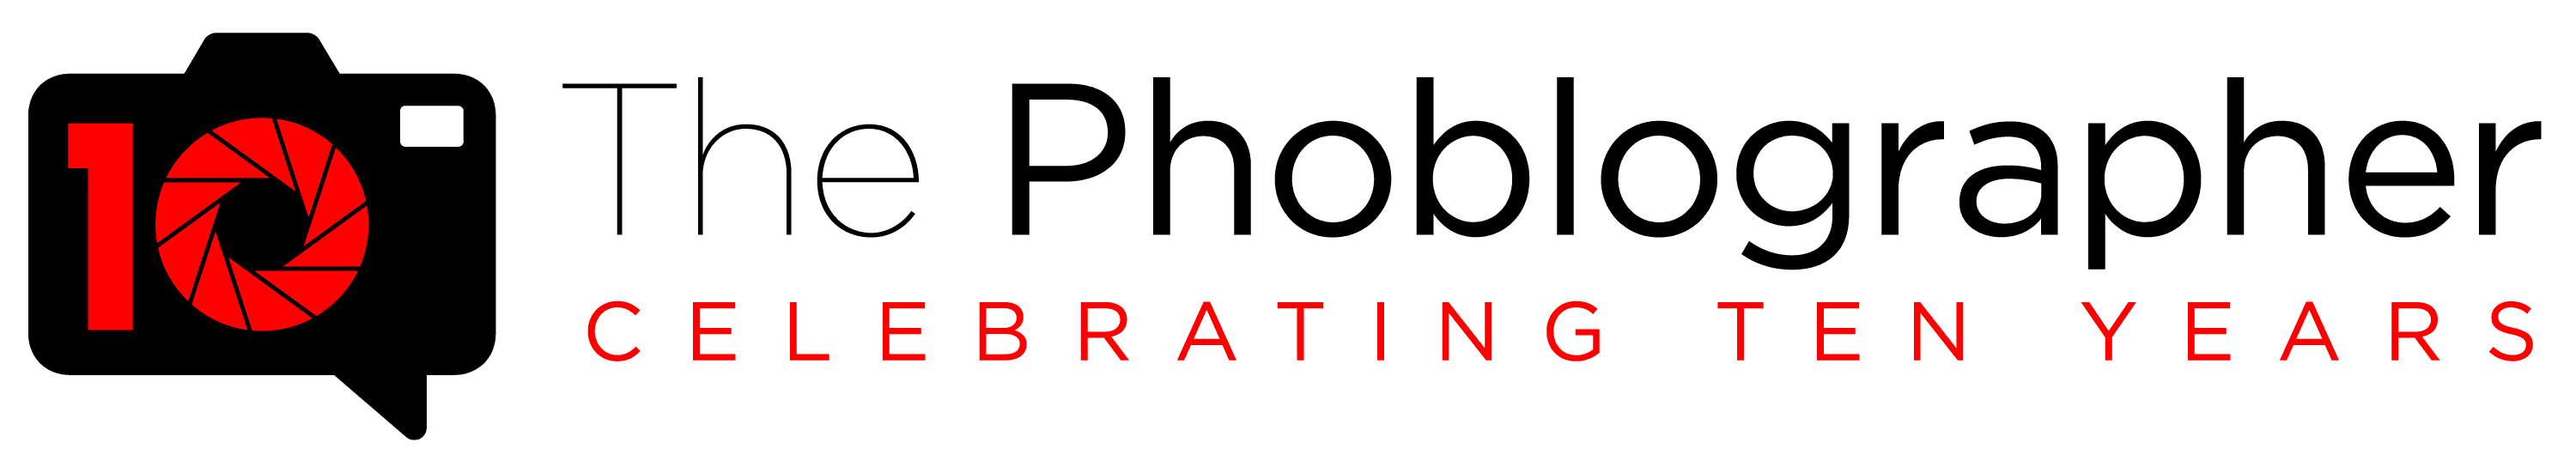 Phoblographer banner